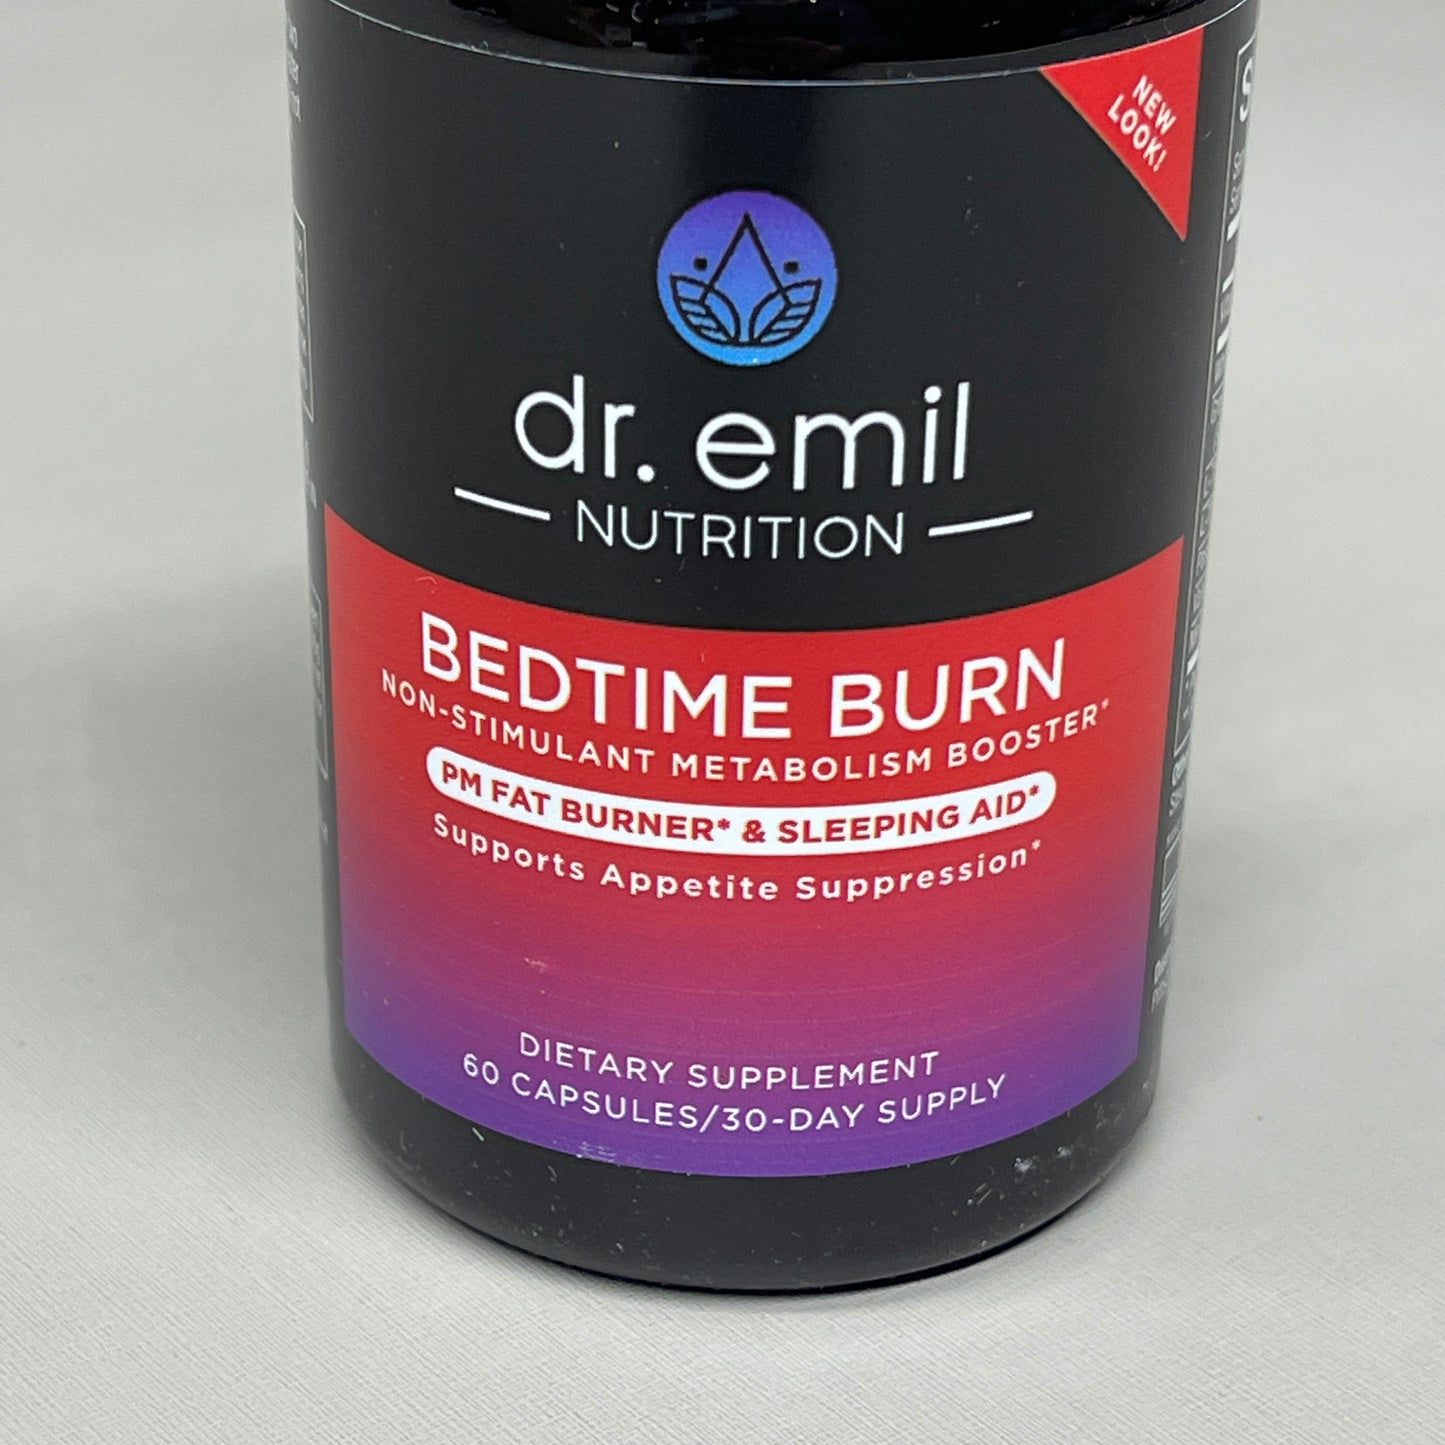 DR. EMIL NUTRITION Bedtime Burn PM Fat Burner and Appetite Suppressant 60 Capsules